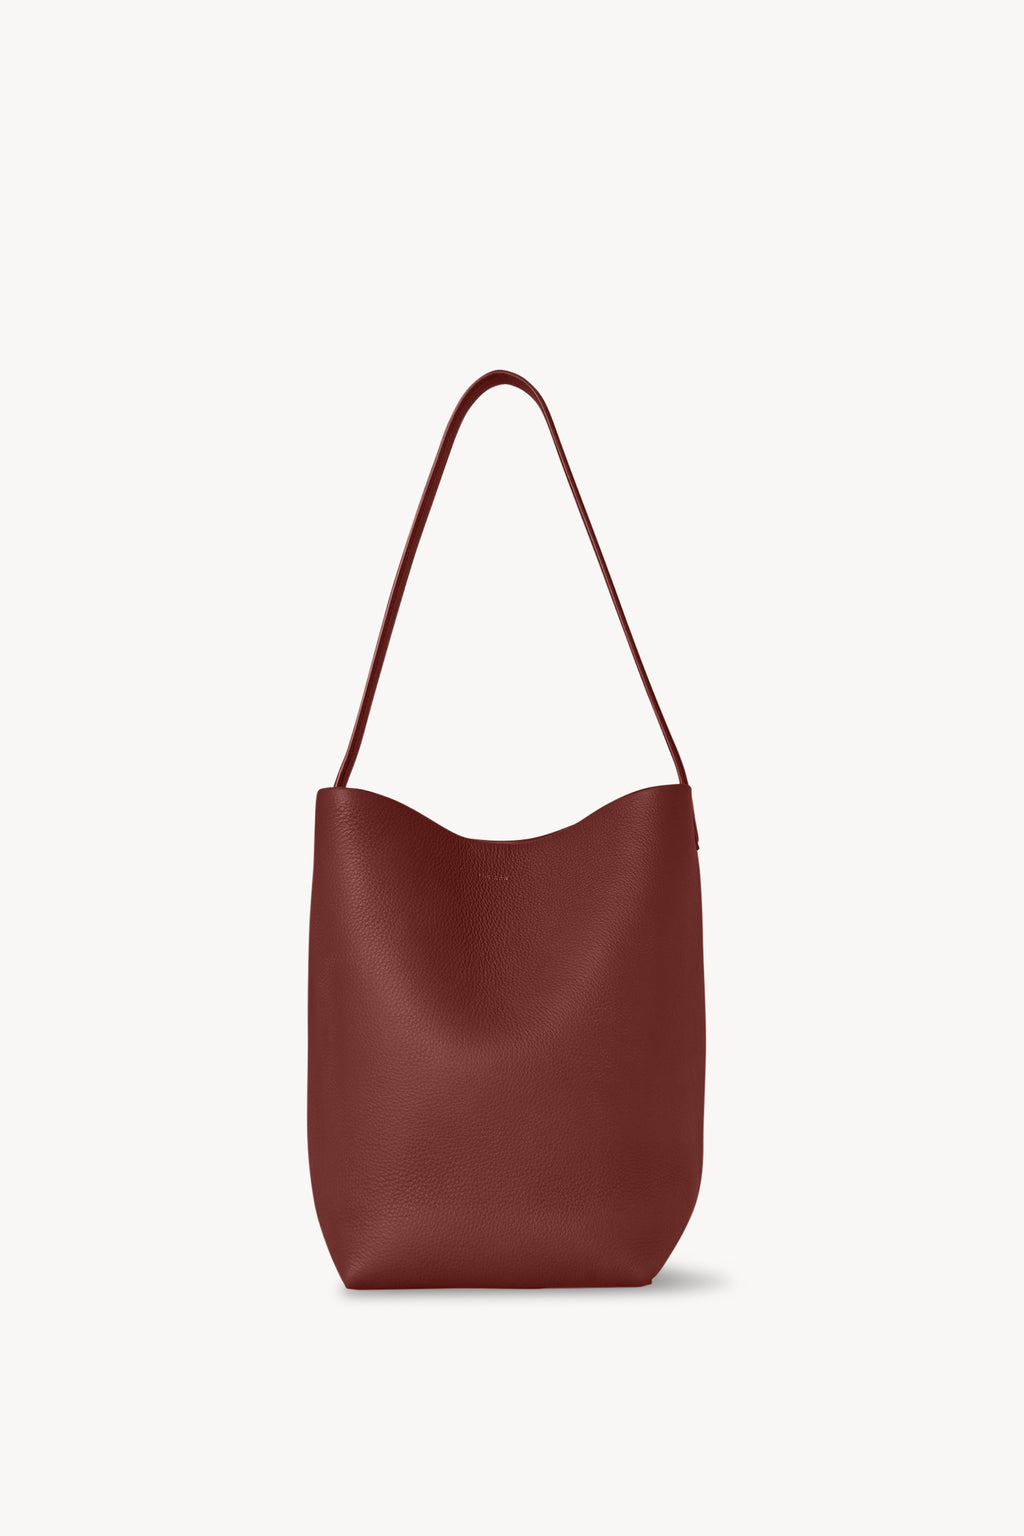 The Row, Medium N/S park terracotta leather tote bag